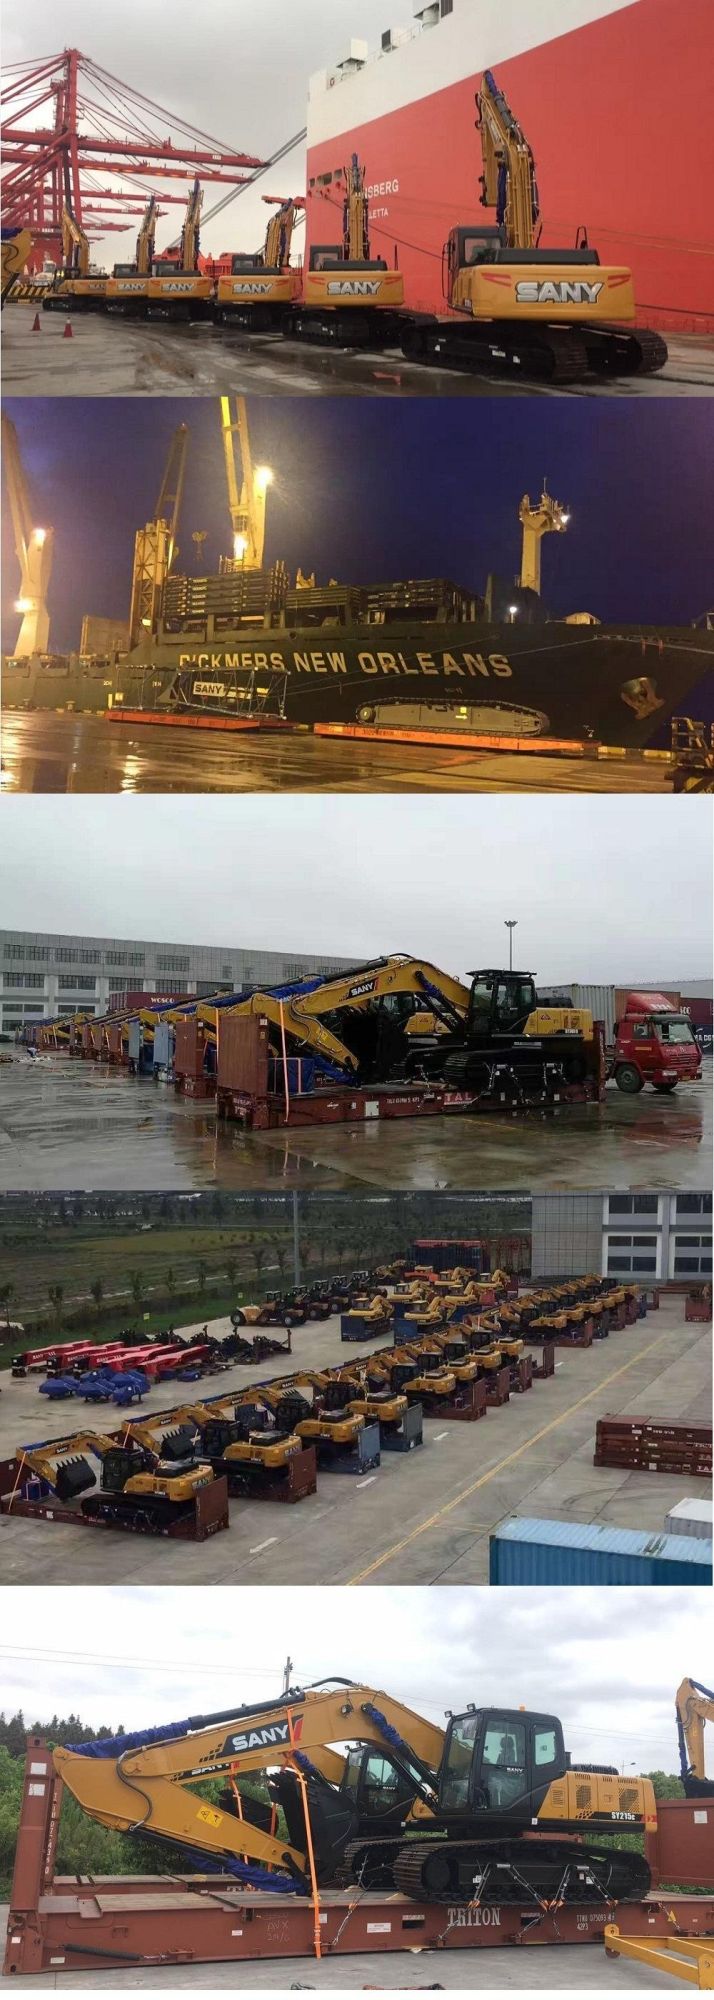 Sany Sy135c 13ton Crawler Excavator Earth Mover China Brand Excavators